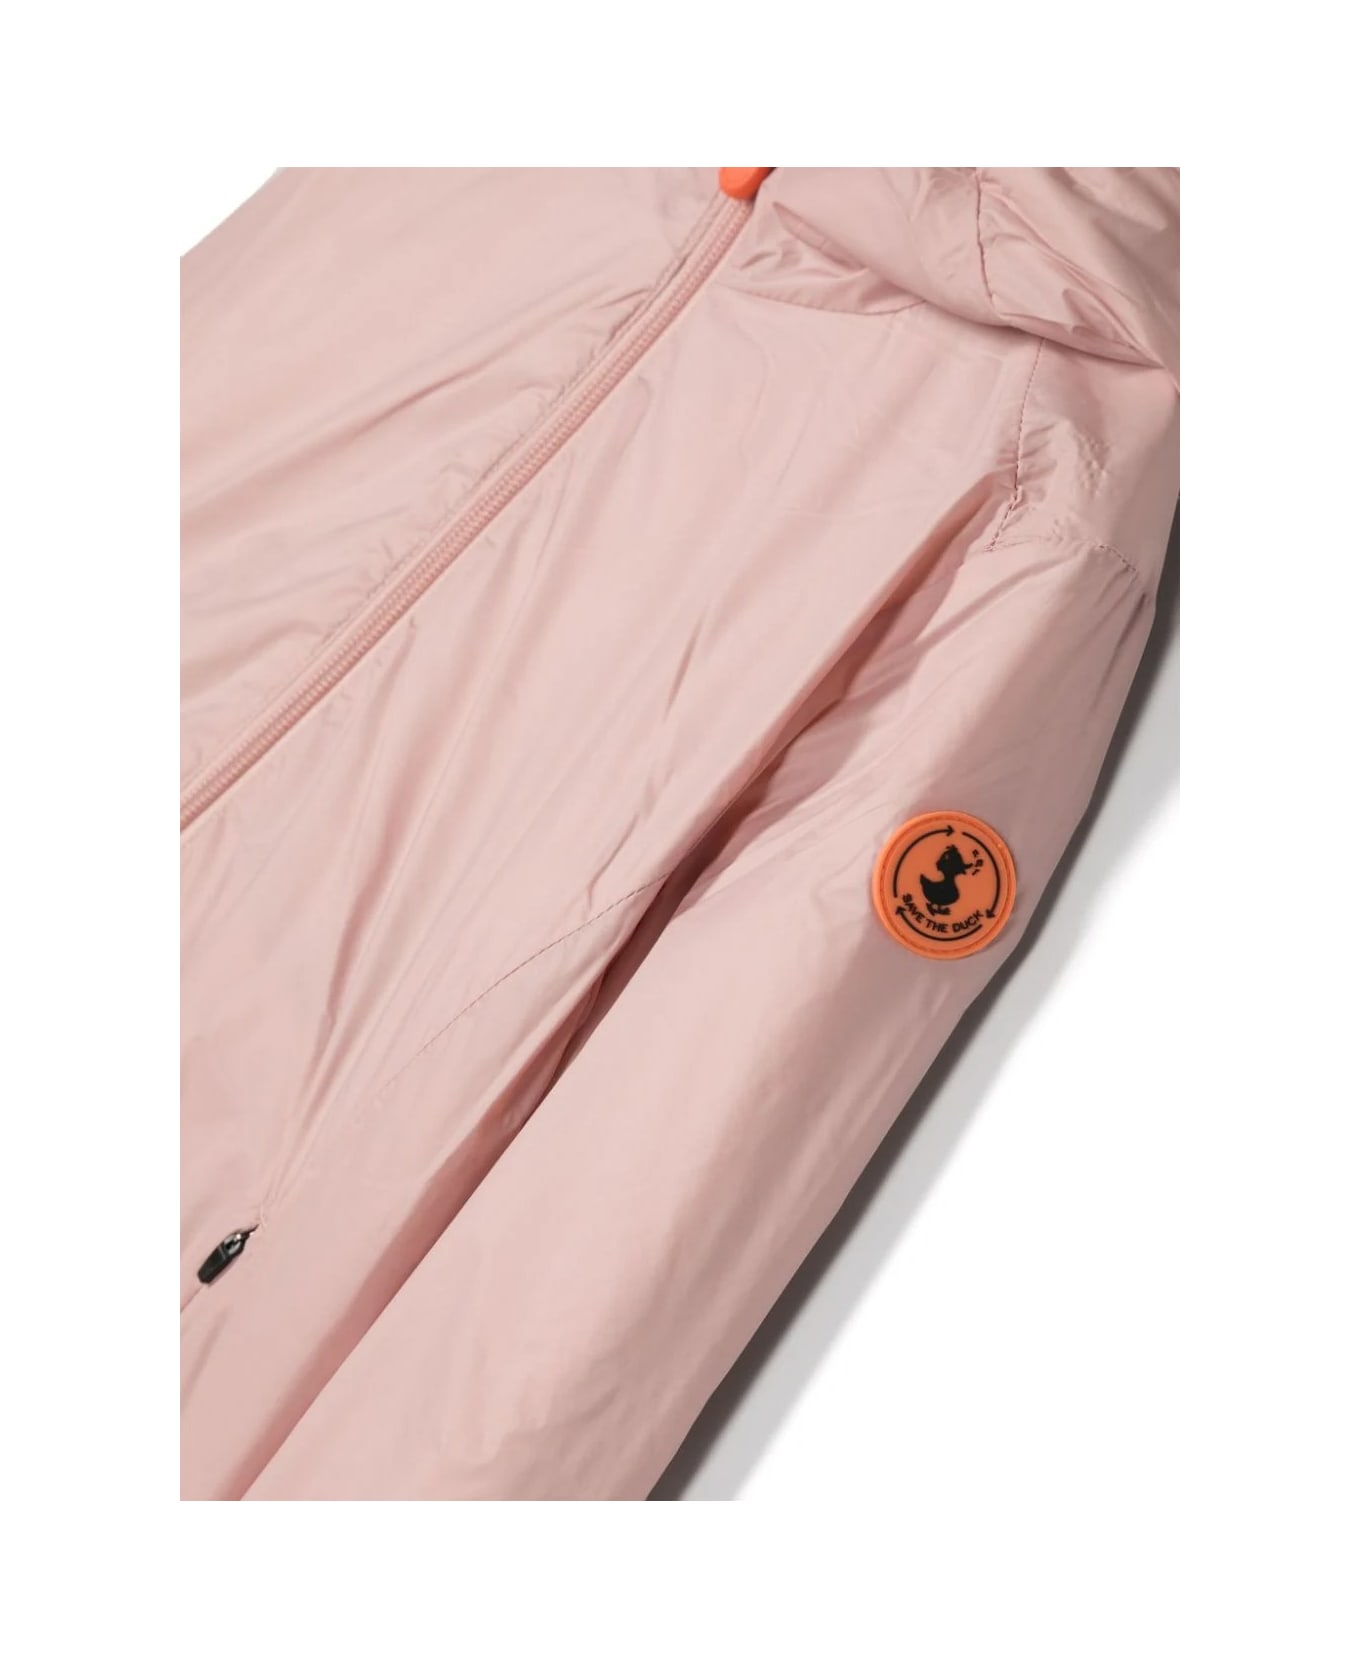 Save the Duck Pink Shilo Windbreaker Jacket - Pink